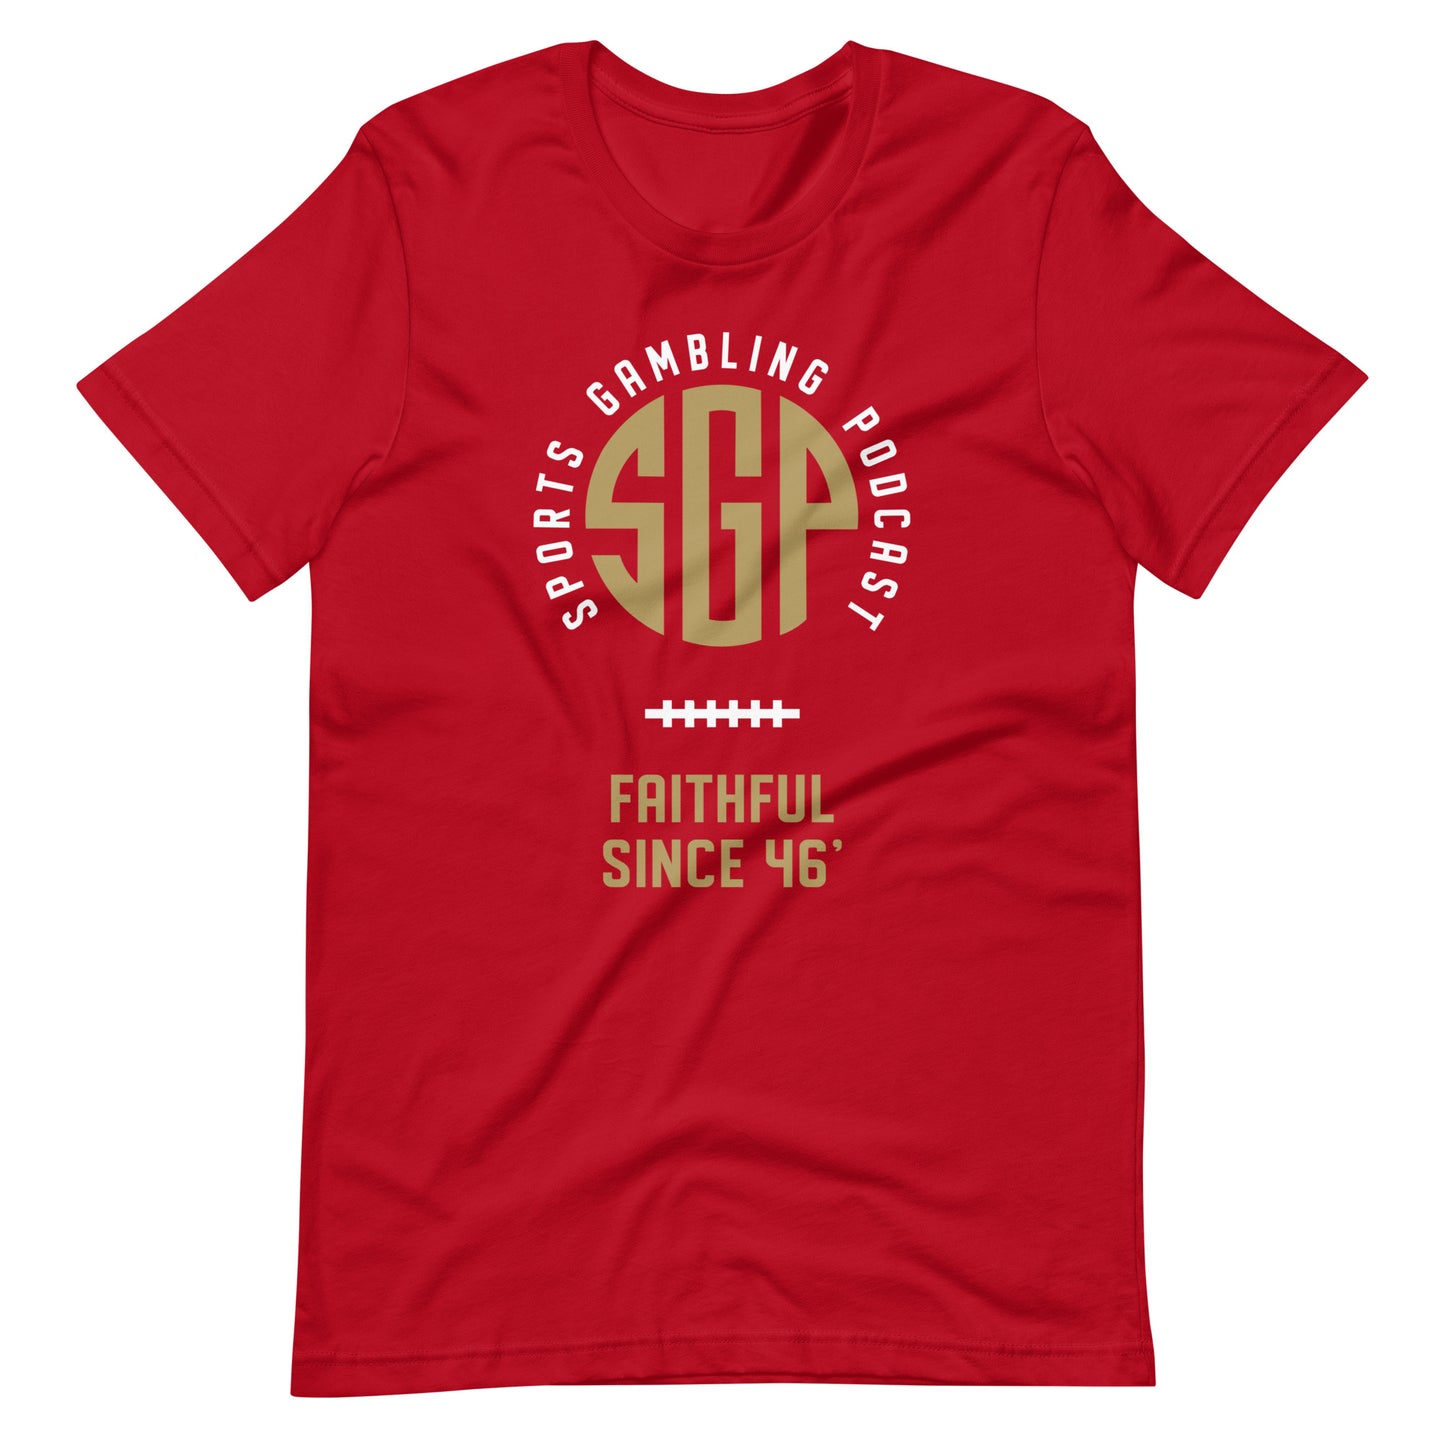 SGP - Faithful Since 46' - Sunday edition - Red Unisex t-shirt